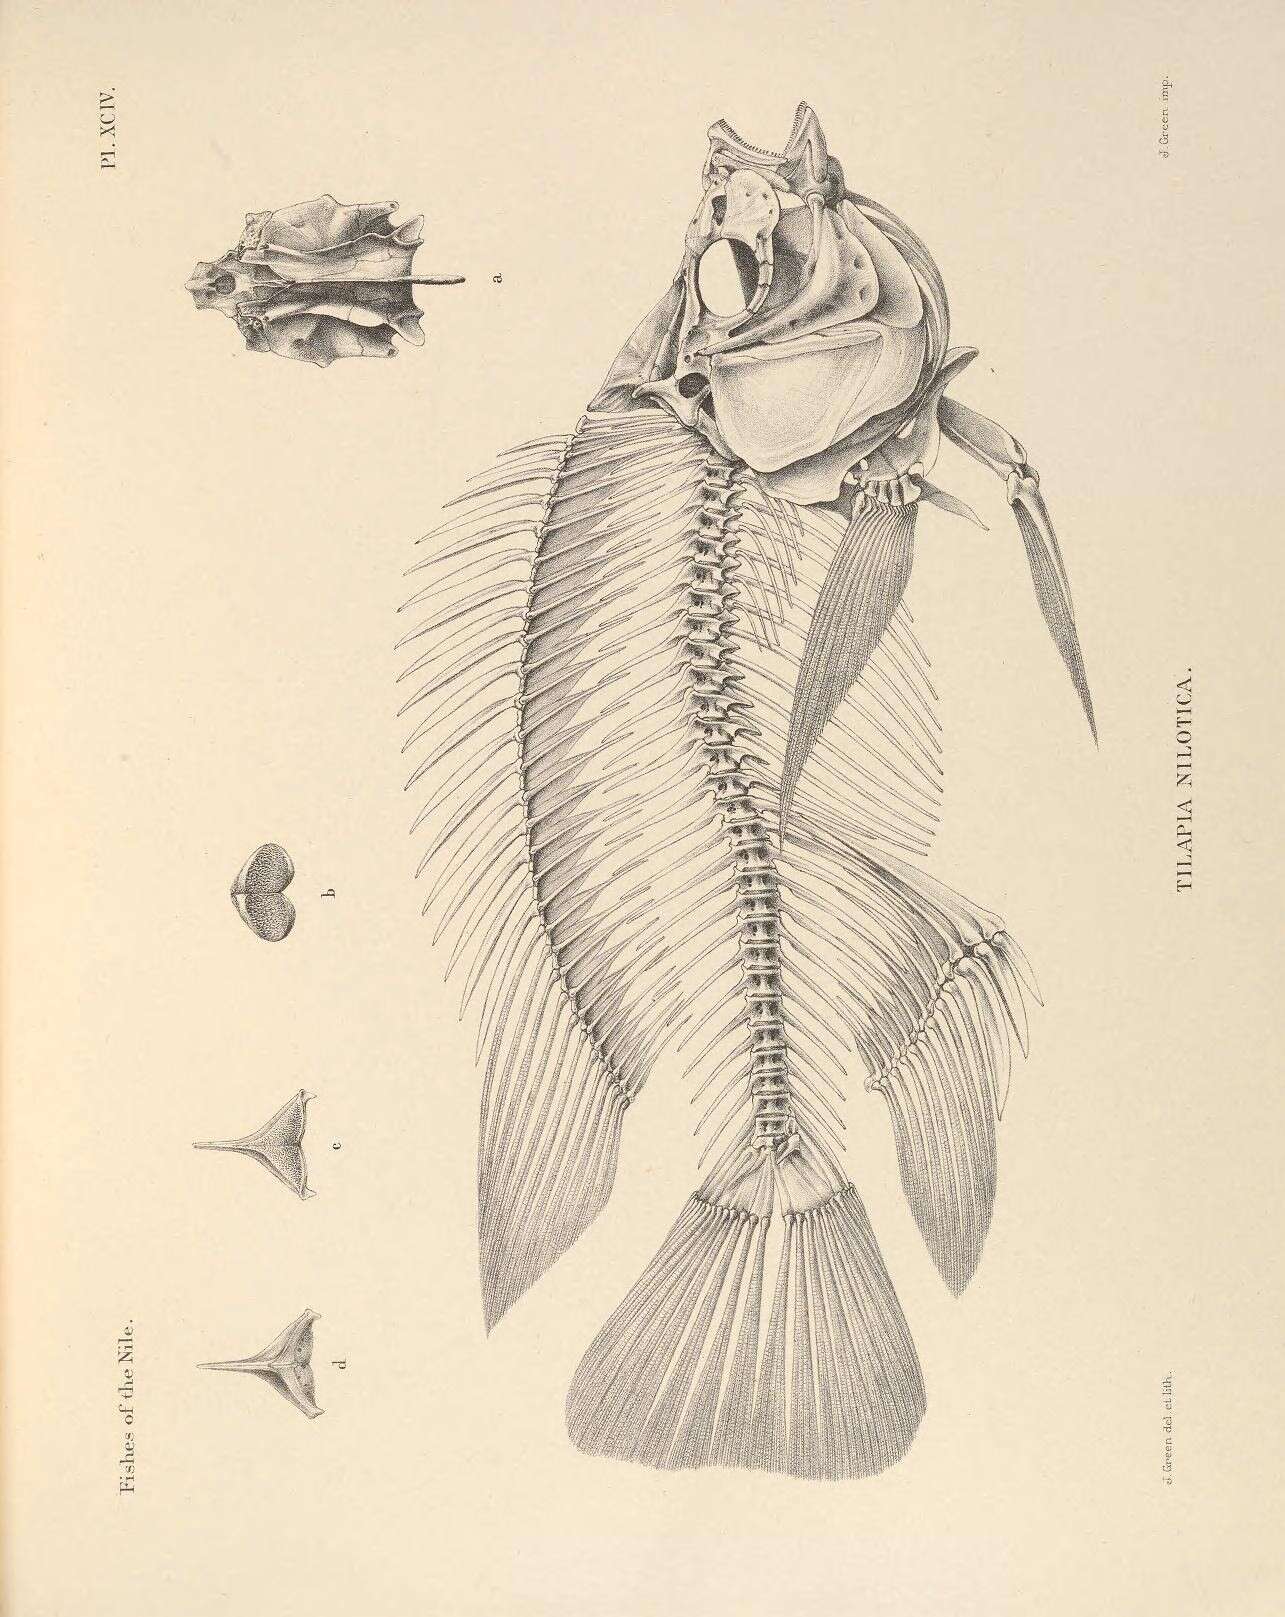 Image of Oreochromis